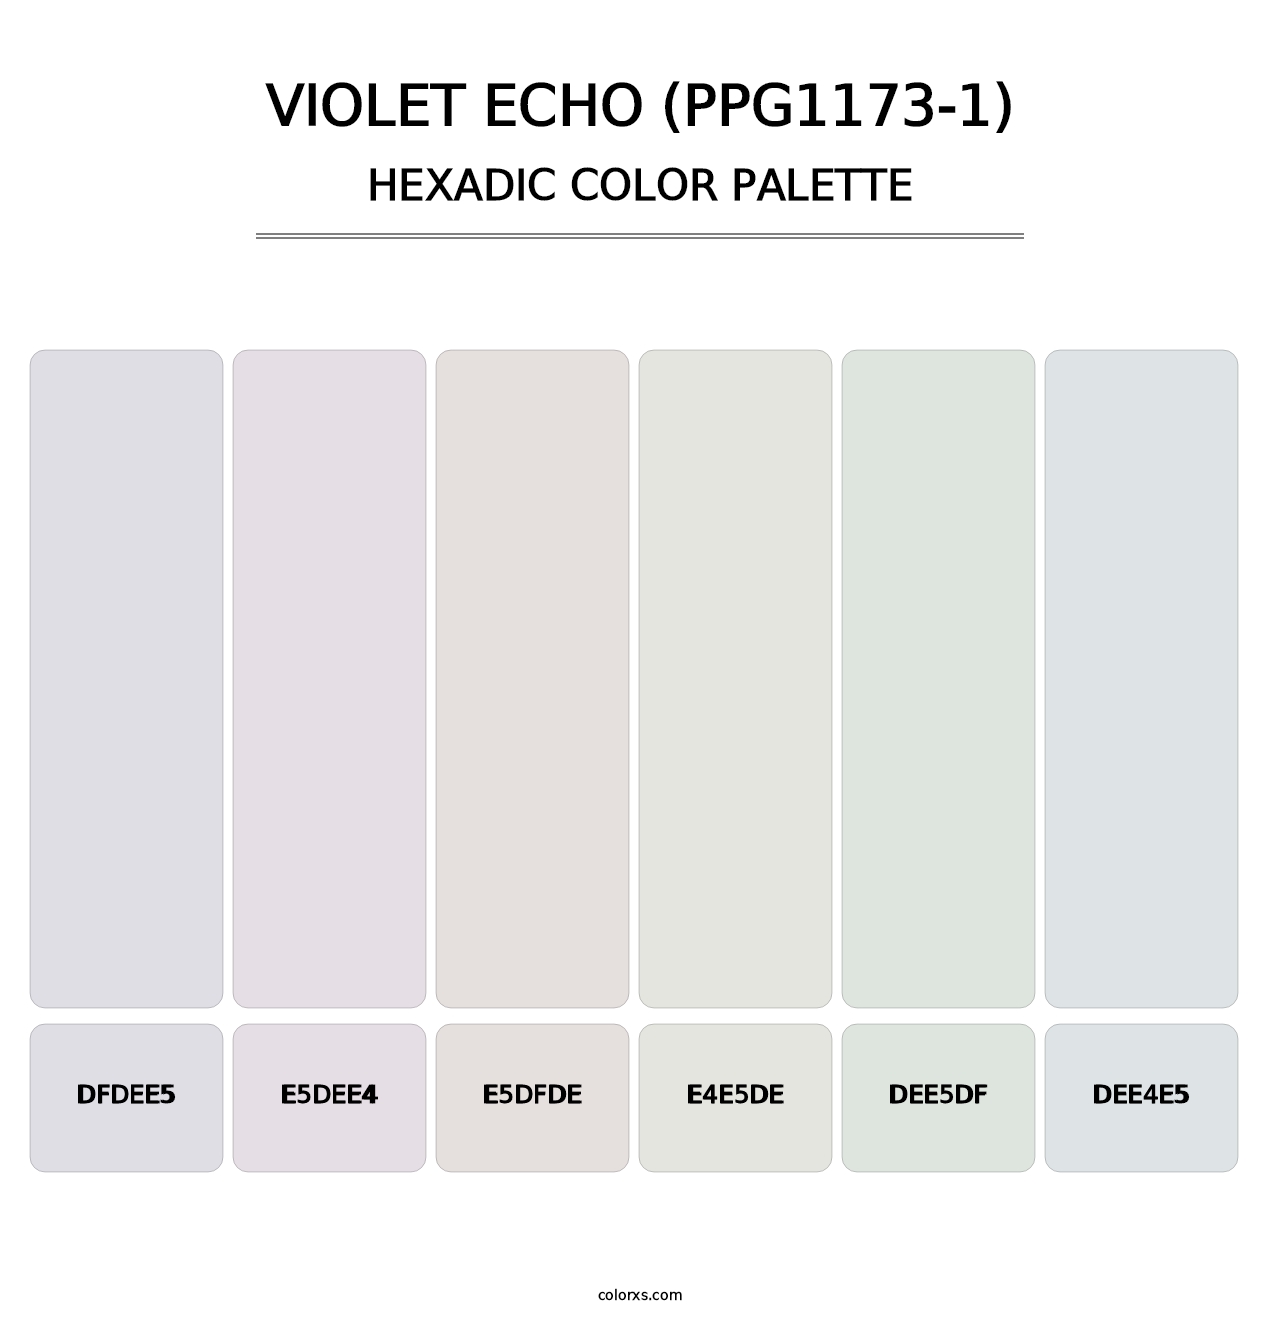 Violet Echo (PPG1173-1) - Hexadic Color Palette